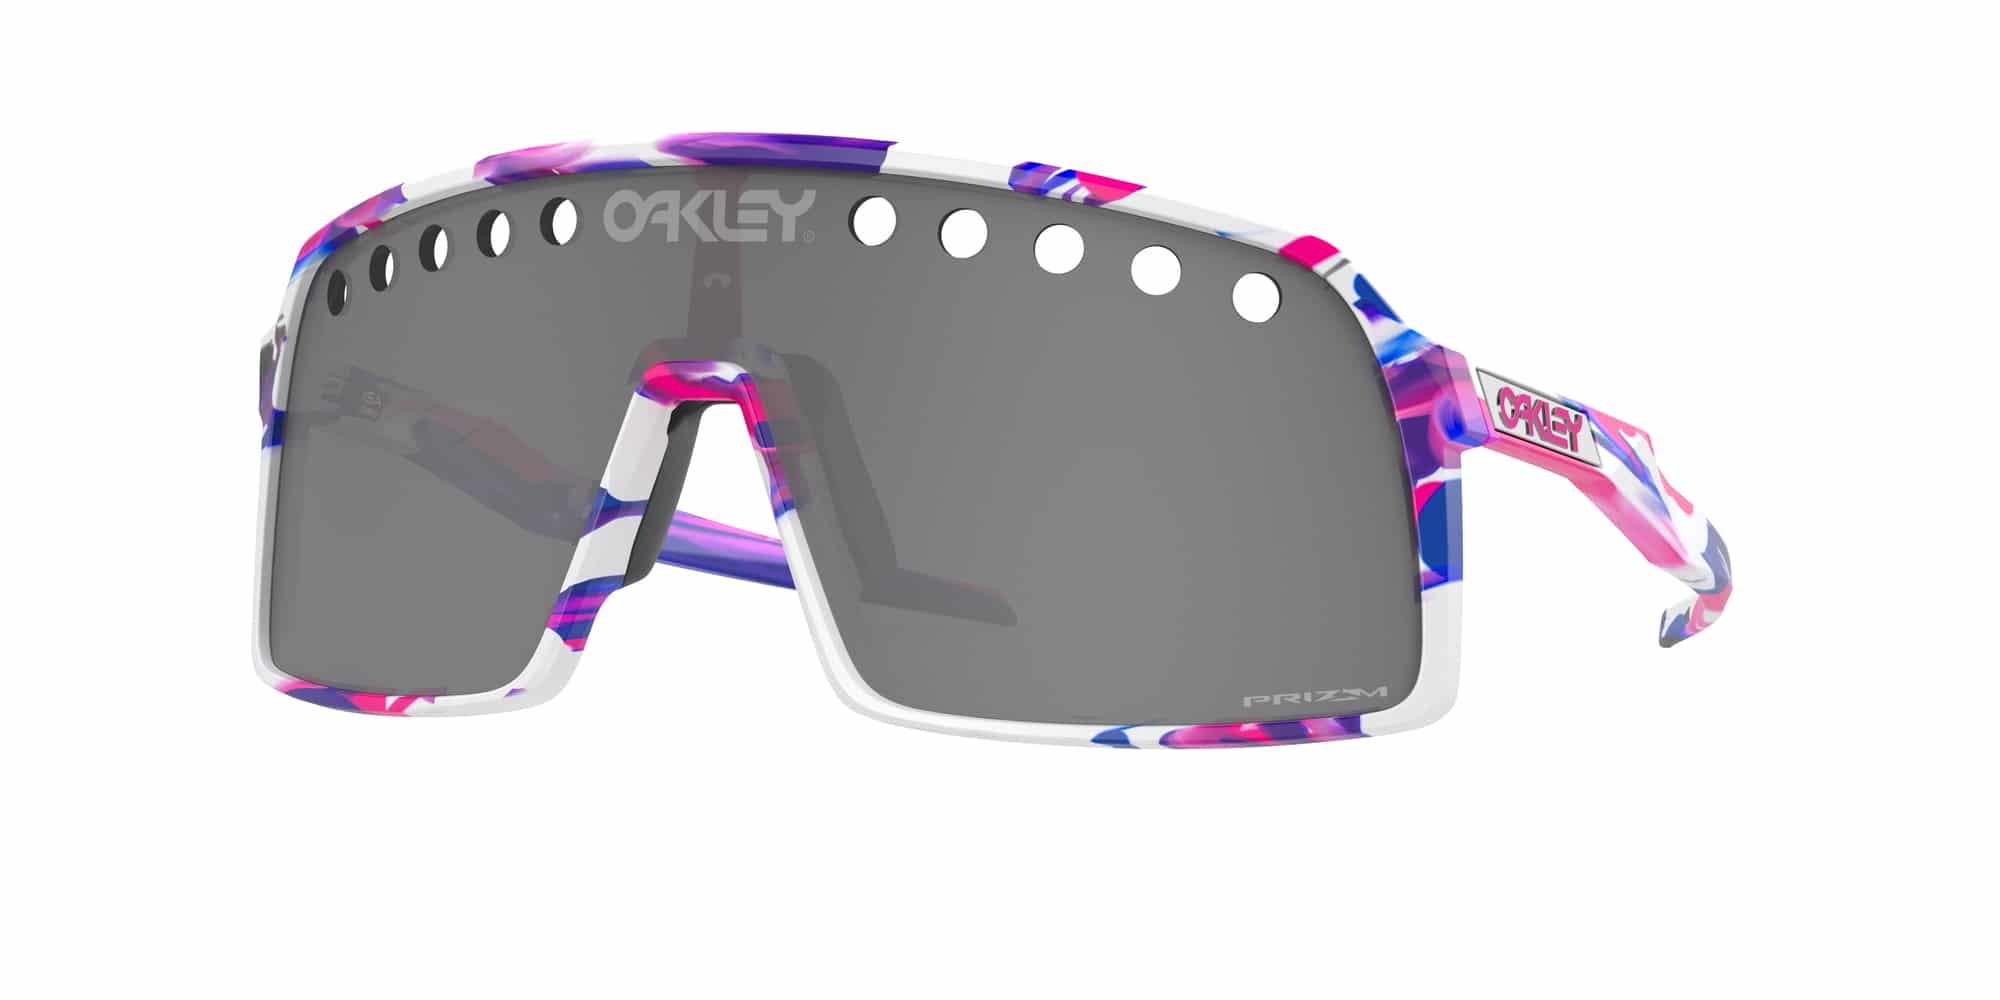 Oakley kokoro sunglasses